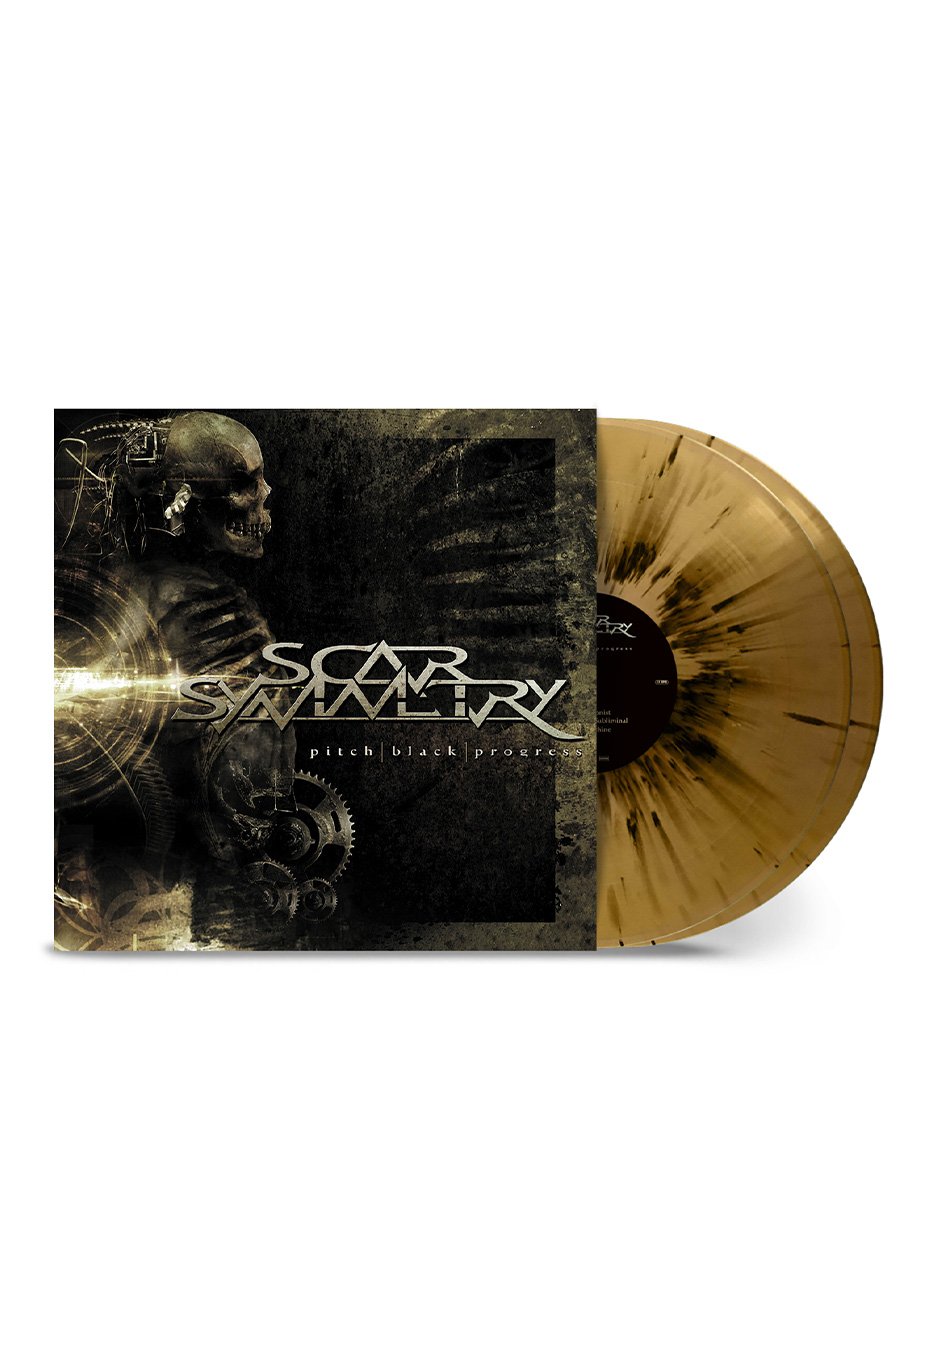 Scar Symmetry - Pitch Black Progress Ltd. Black/Gold - Splattered 2 Vinyl